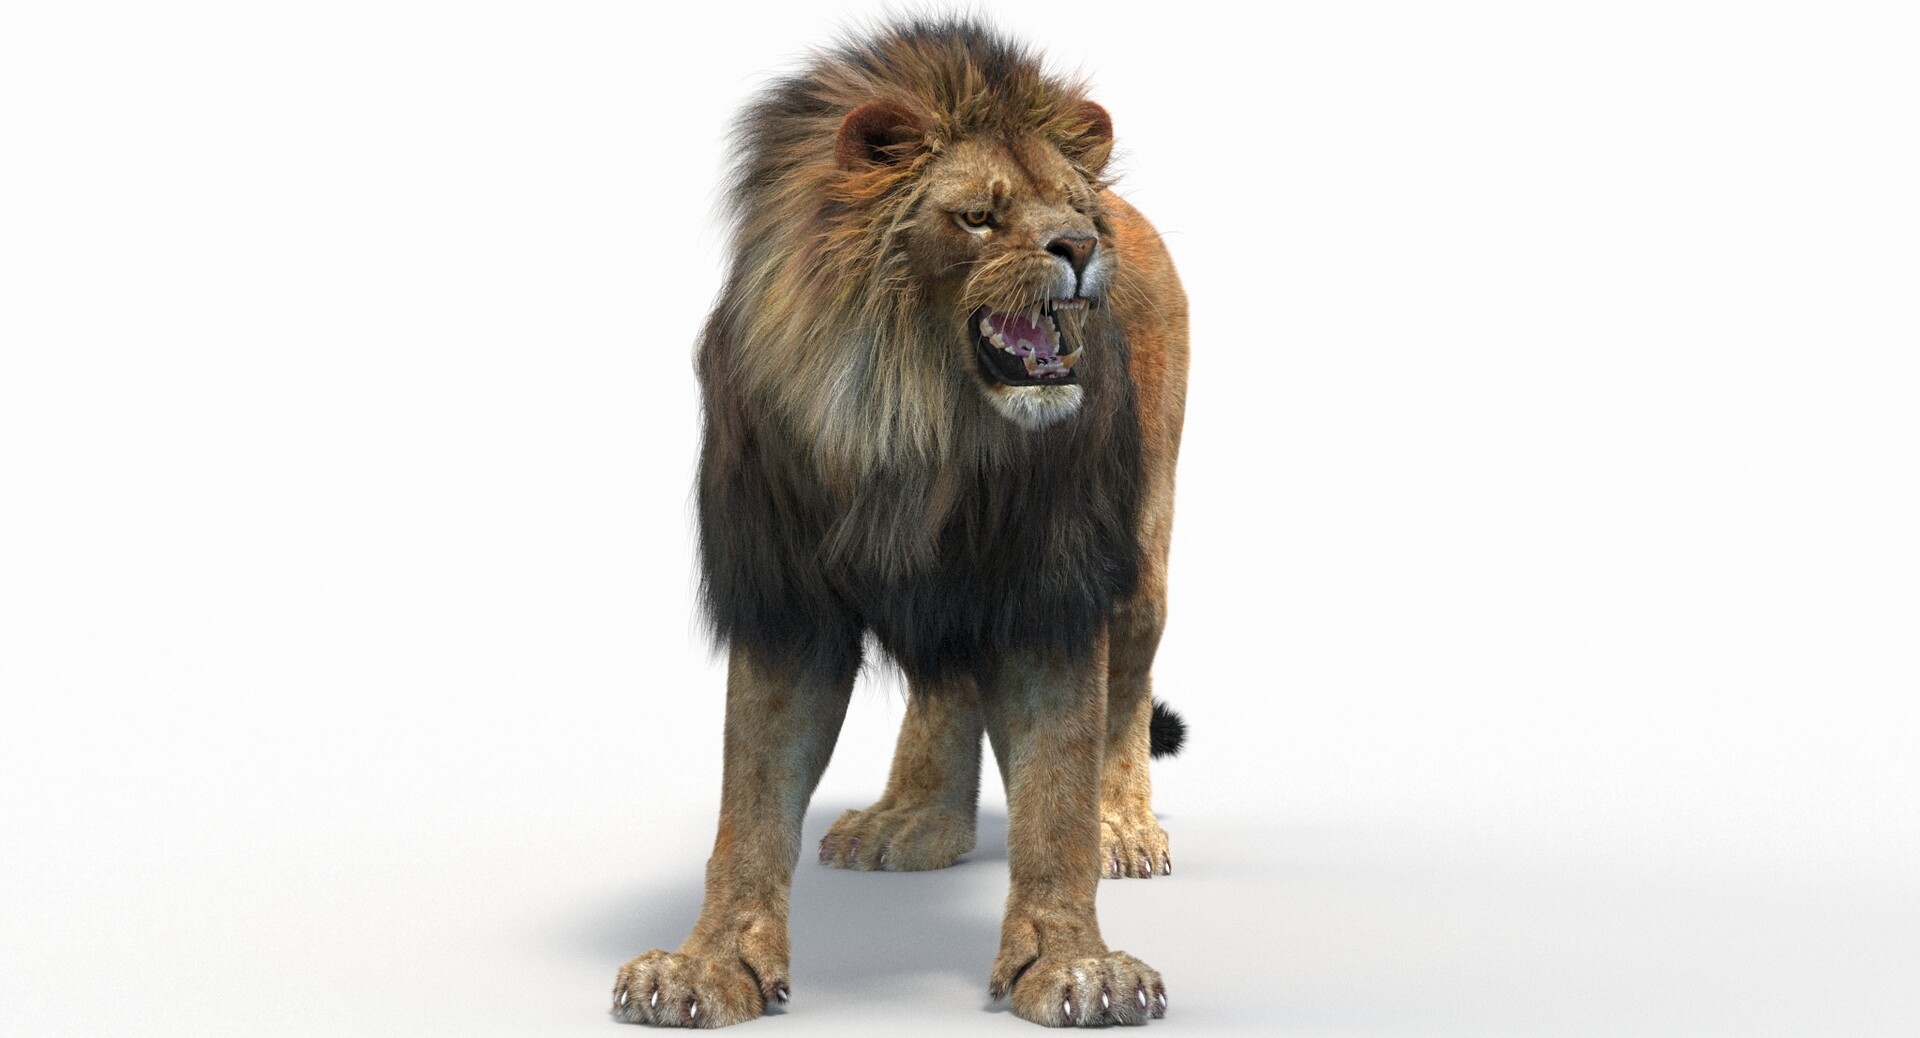 ArtStation - Lion 3d Model Animated with Fur